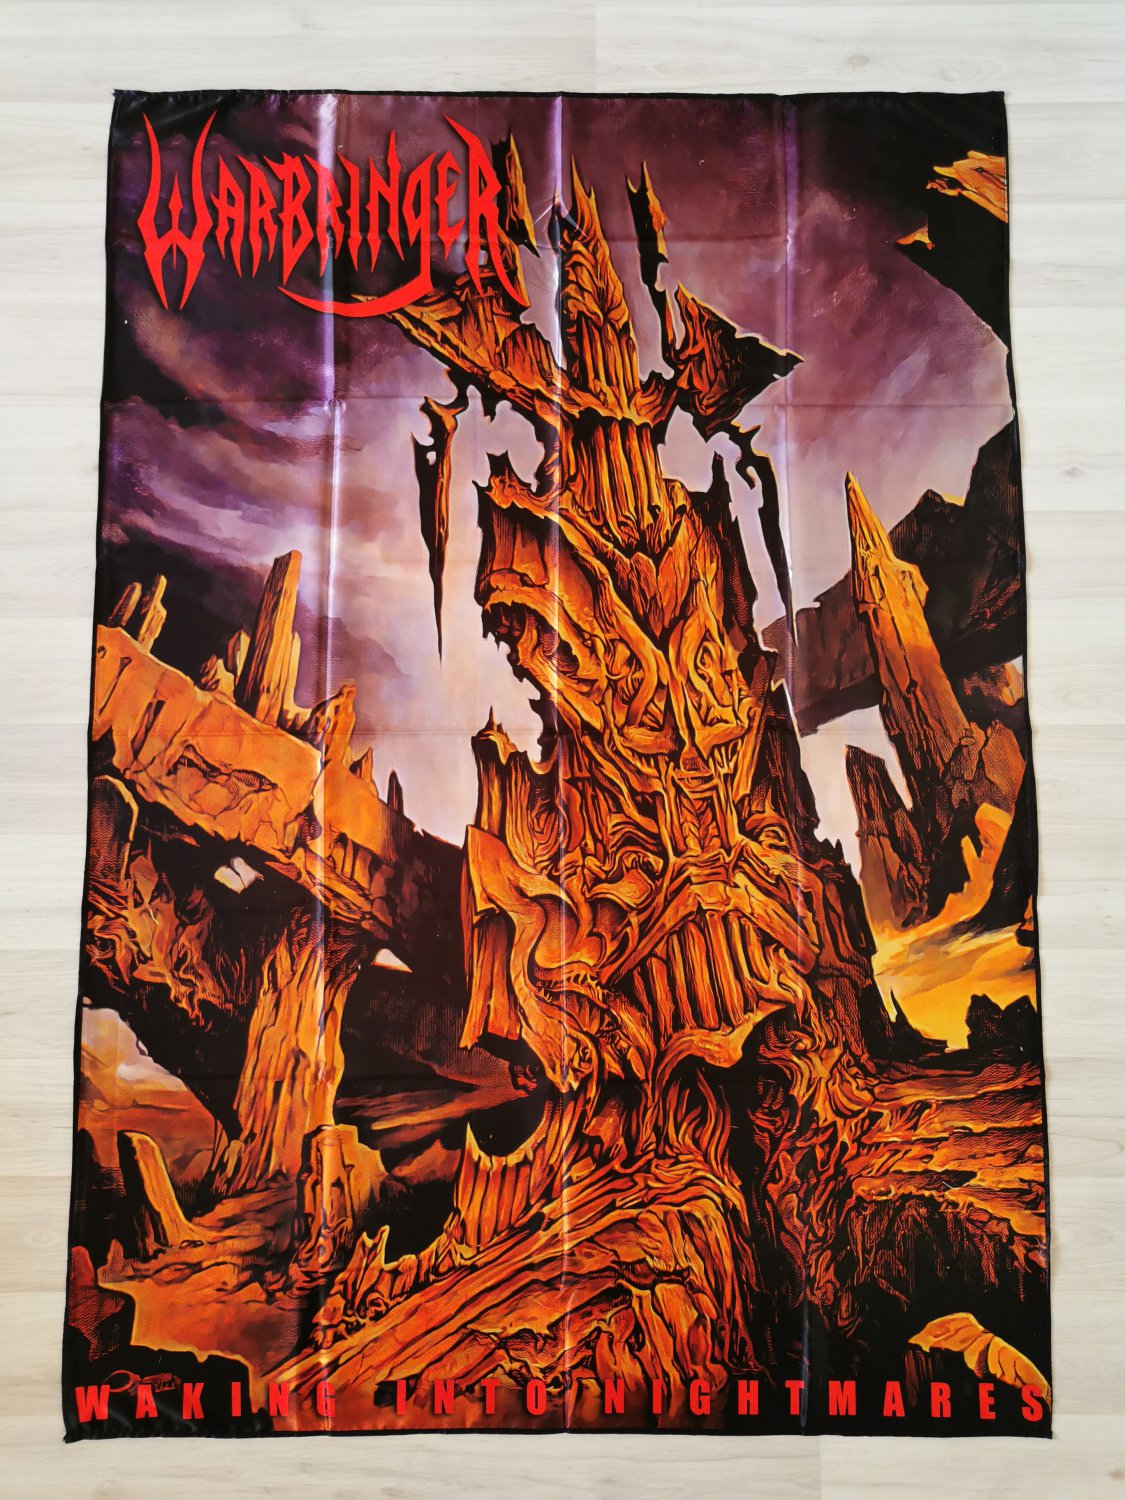 WARBRINGER - Waking into nightmares FLAG Cloth poster Thrash metal Vektor Municipal waste